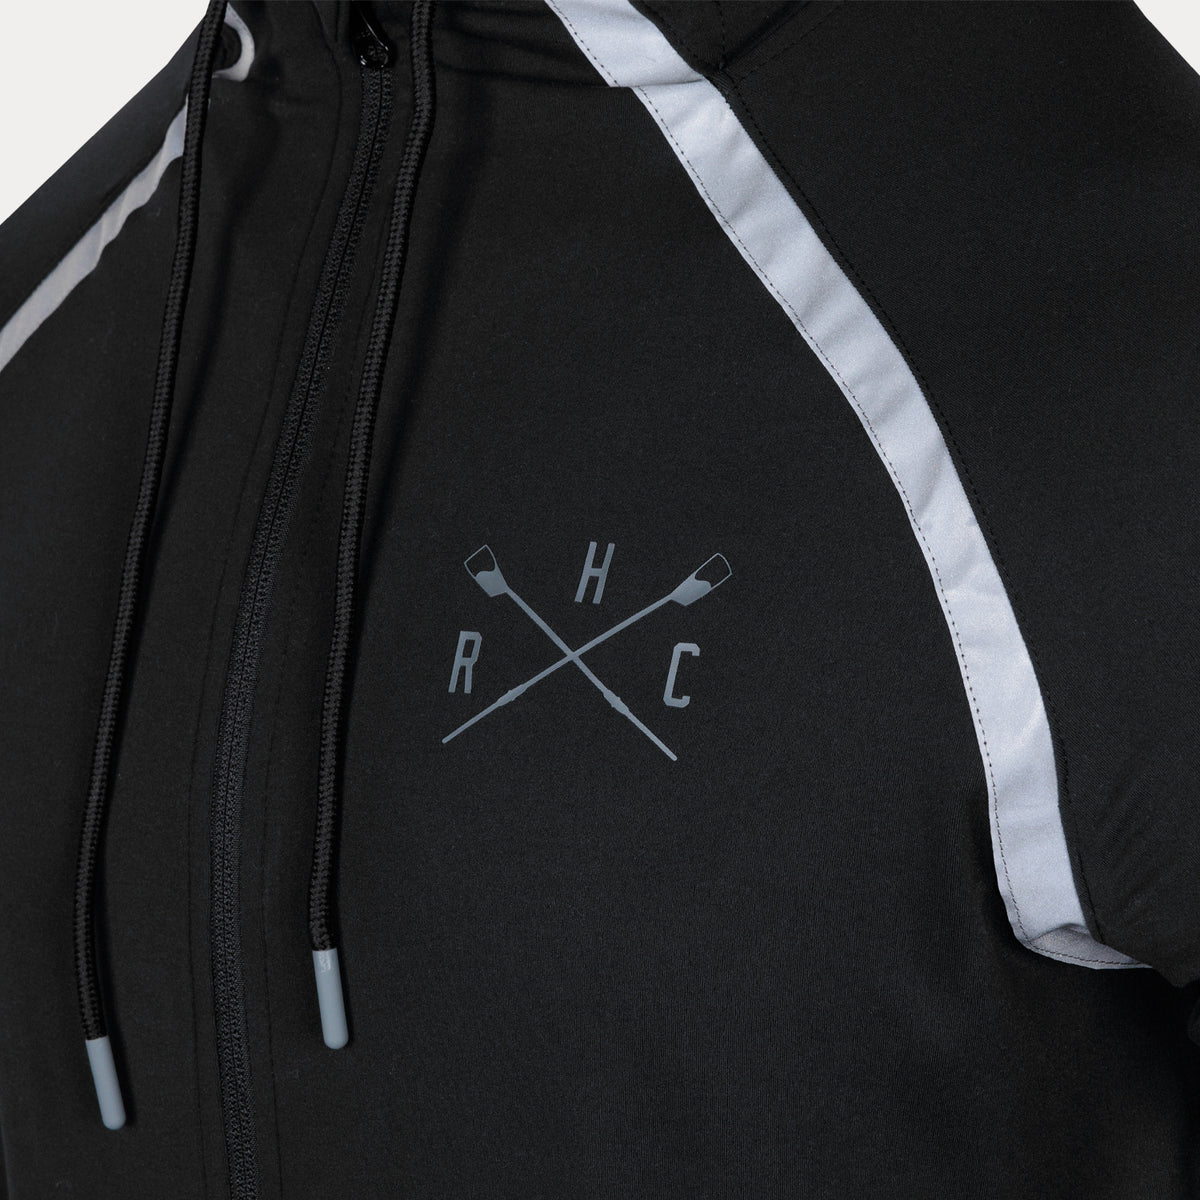 closeup of crossed oar logo on left chest of full zip jacket